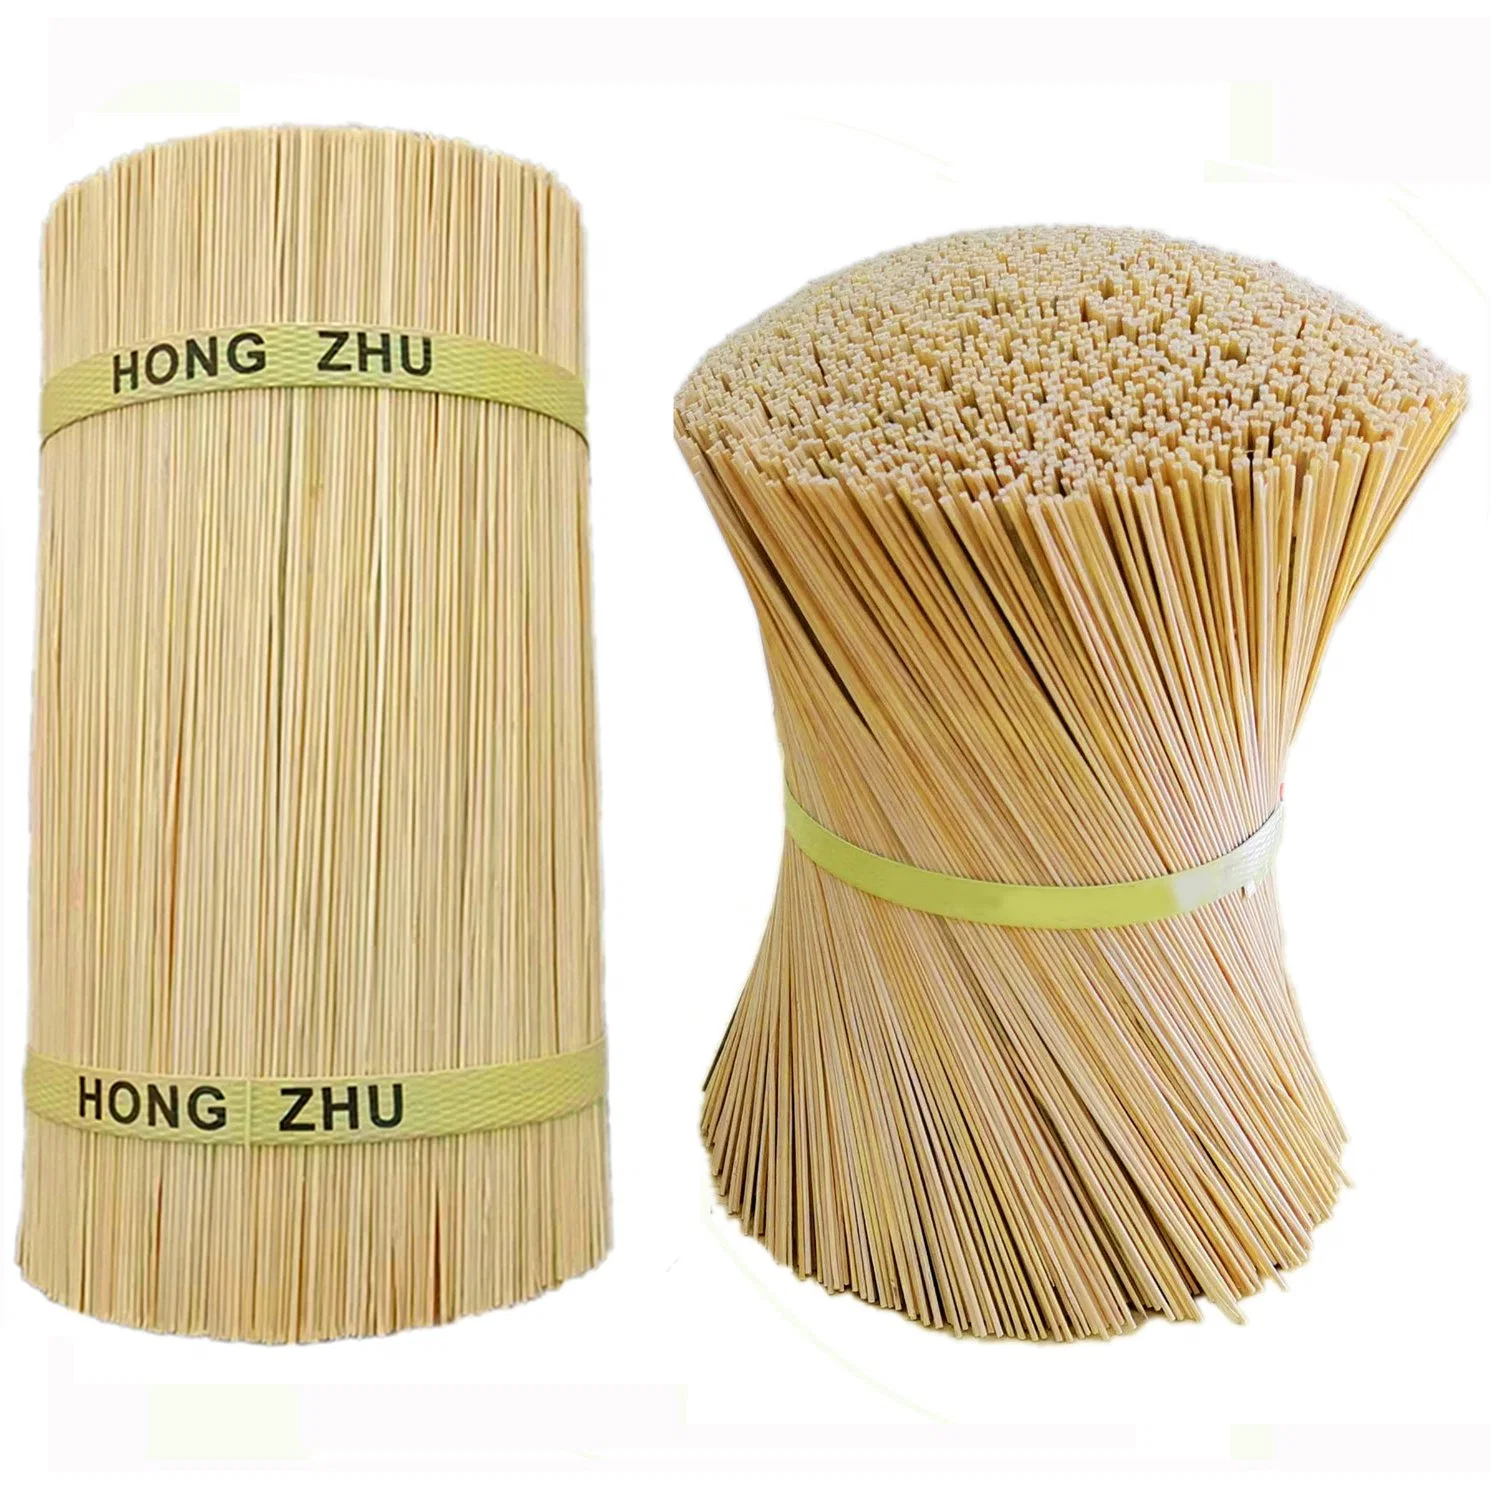 Usine de bambou Lianfeng Xunwu 7, 8, 9, 10, 12 pouces bâtons encens bambou Agarbatti pour